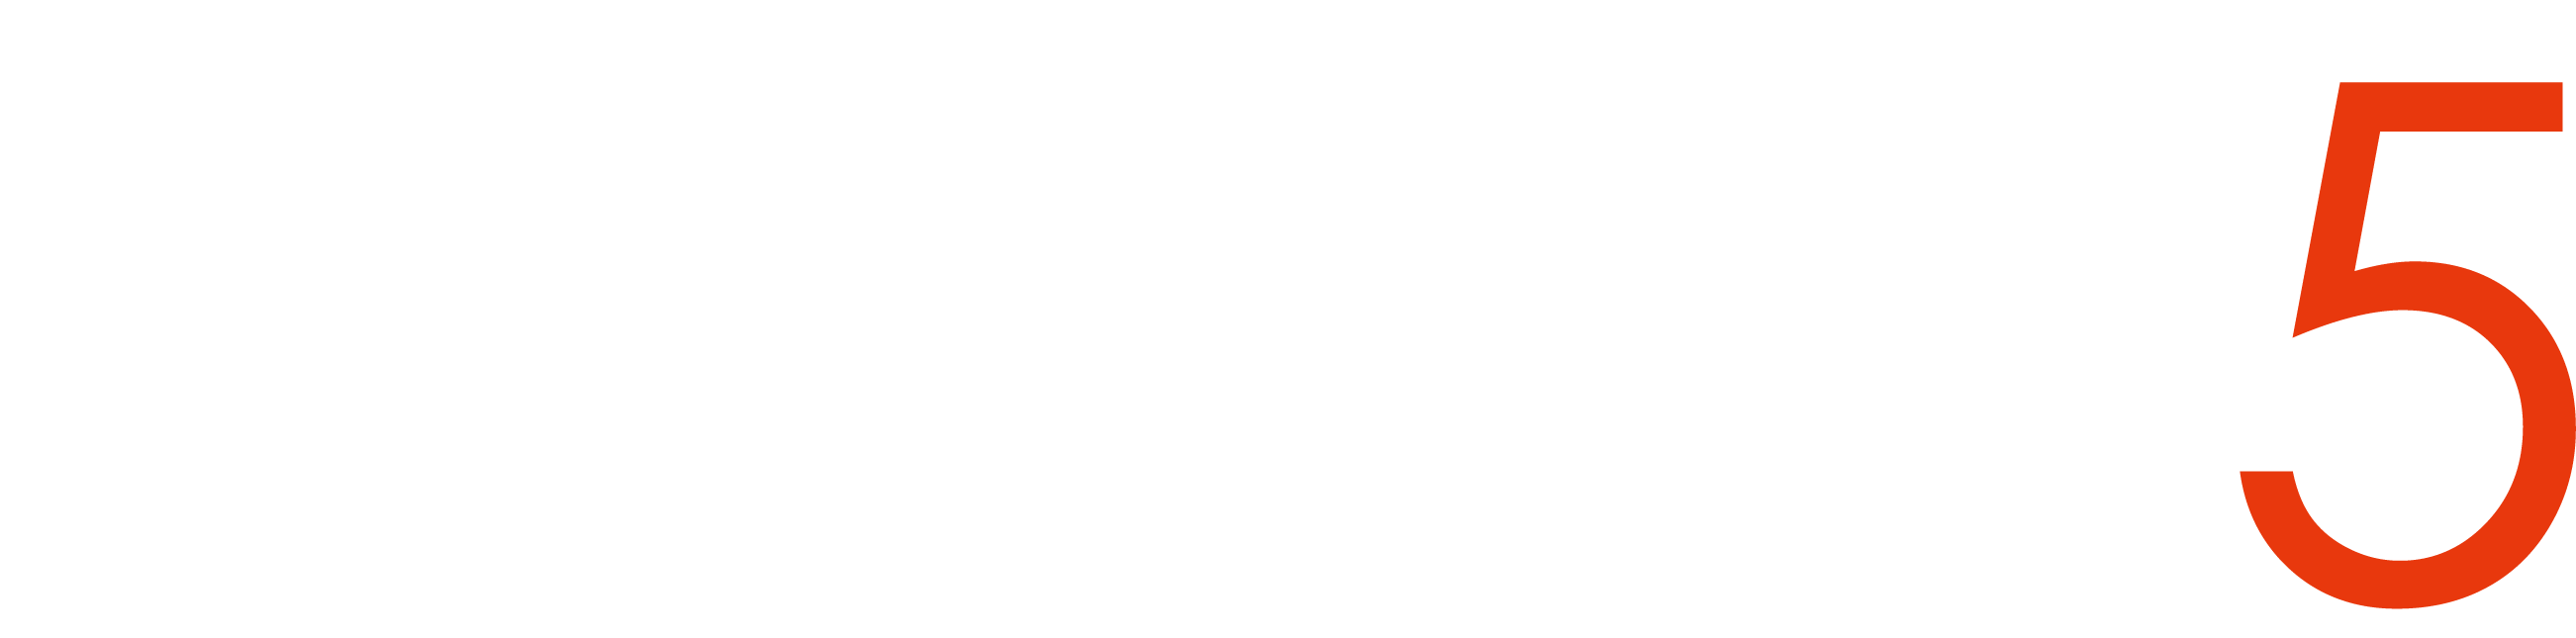 2D Animation Software for Cartoon Maker